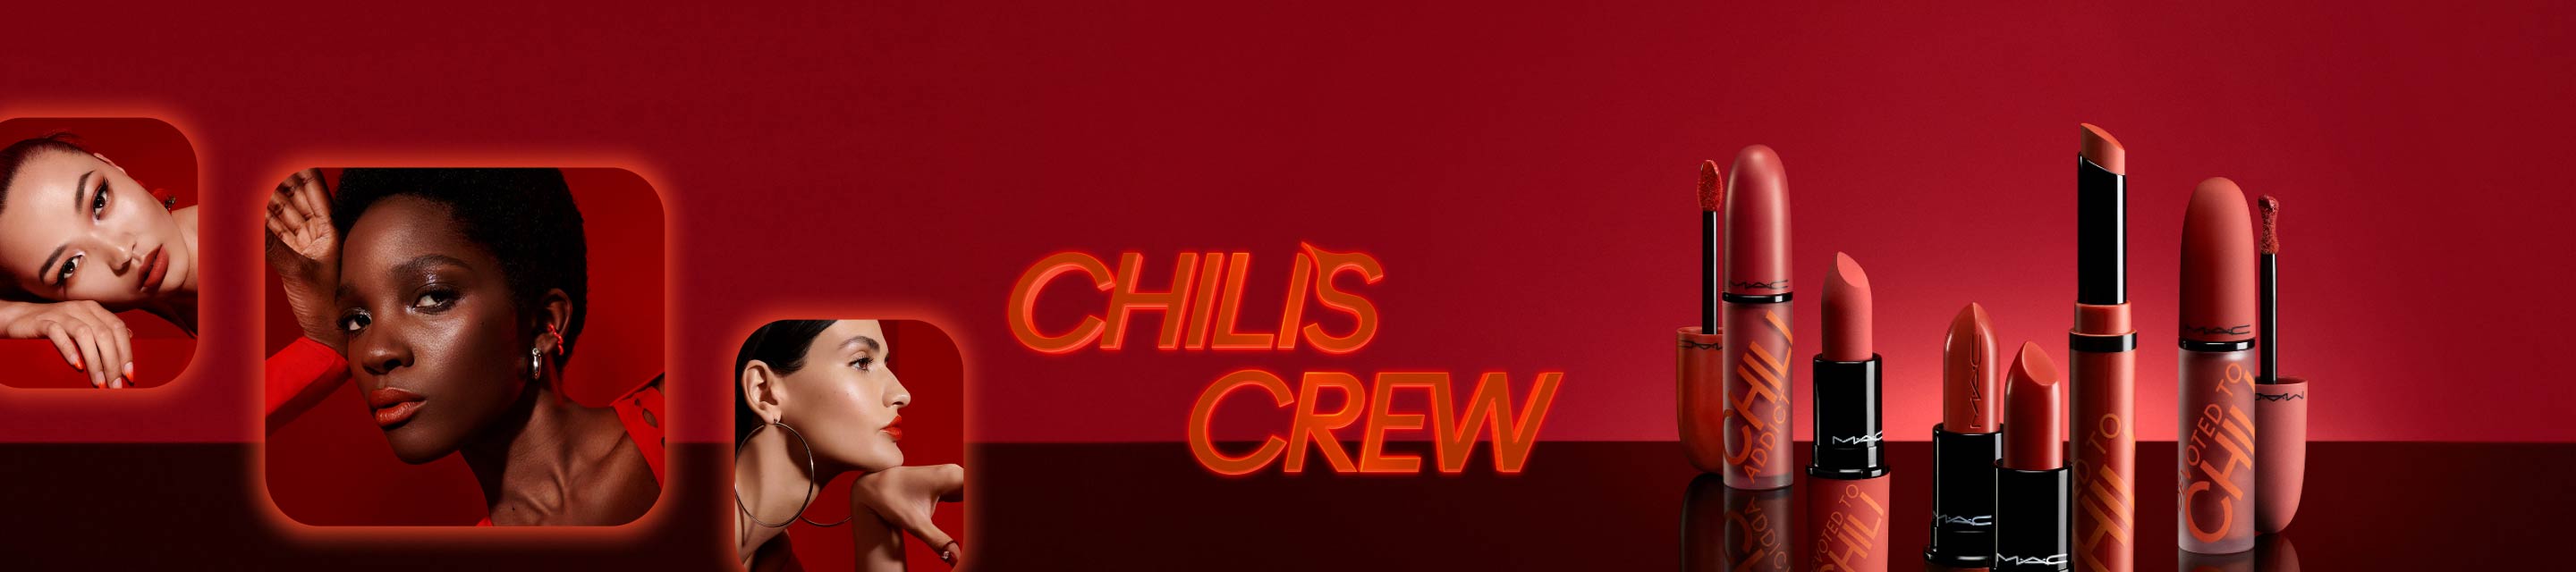 chili's crew